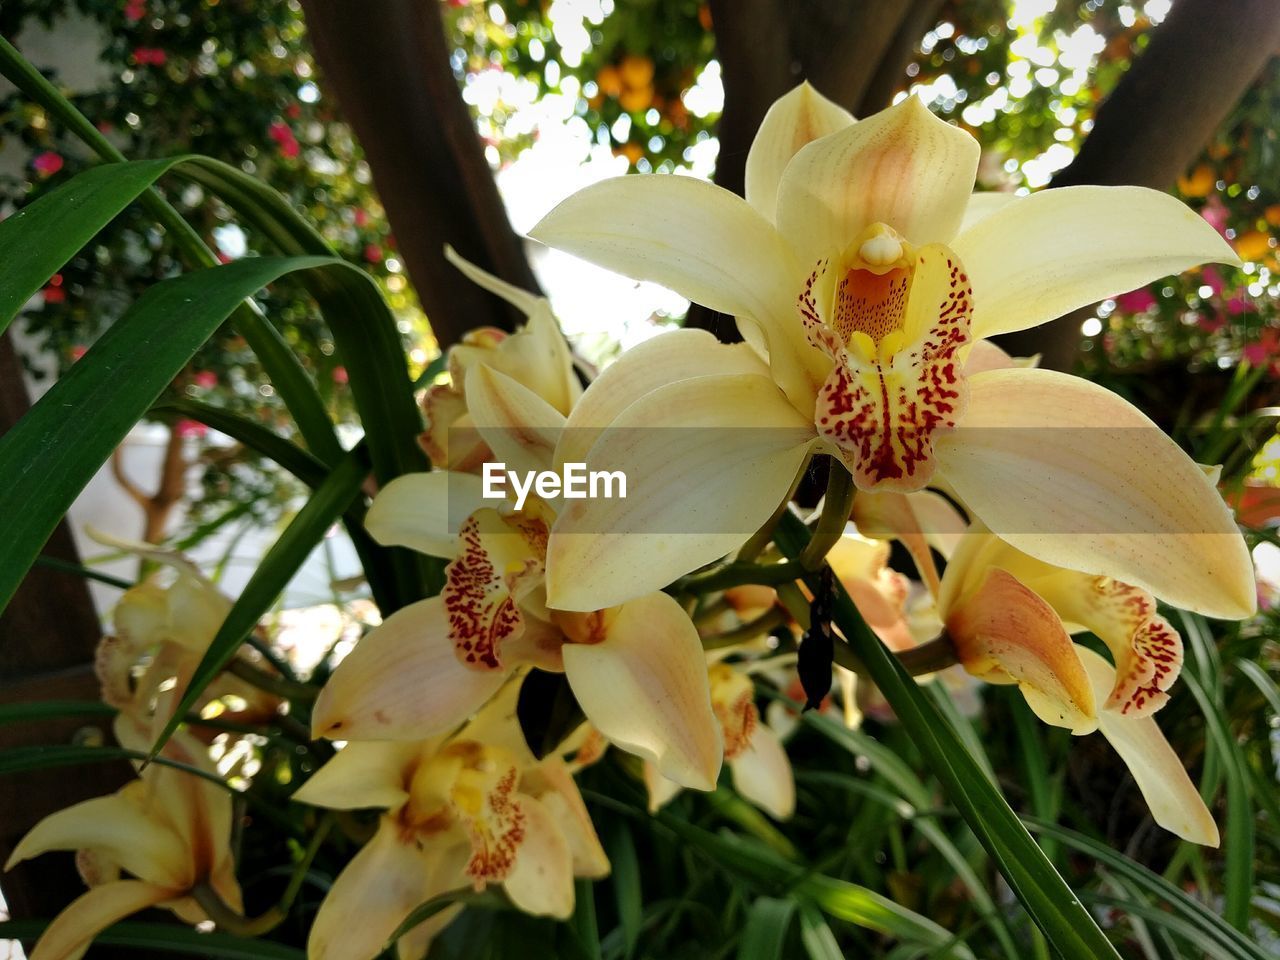 Cymbidium orchids blooming in park